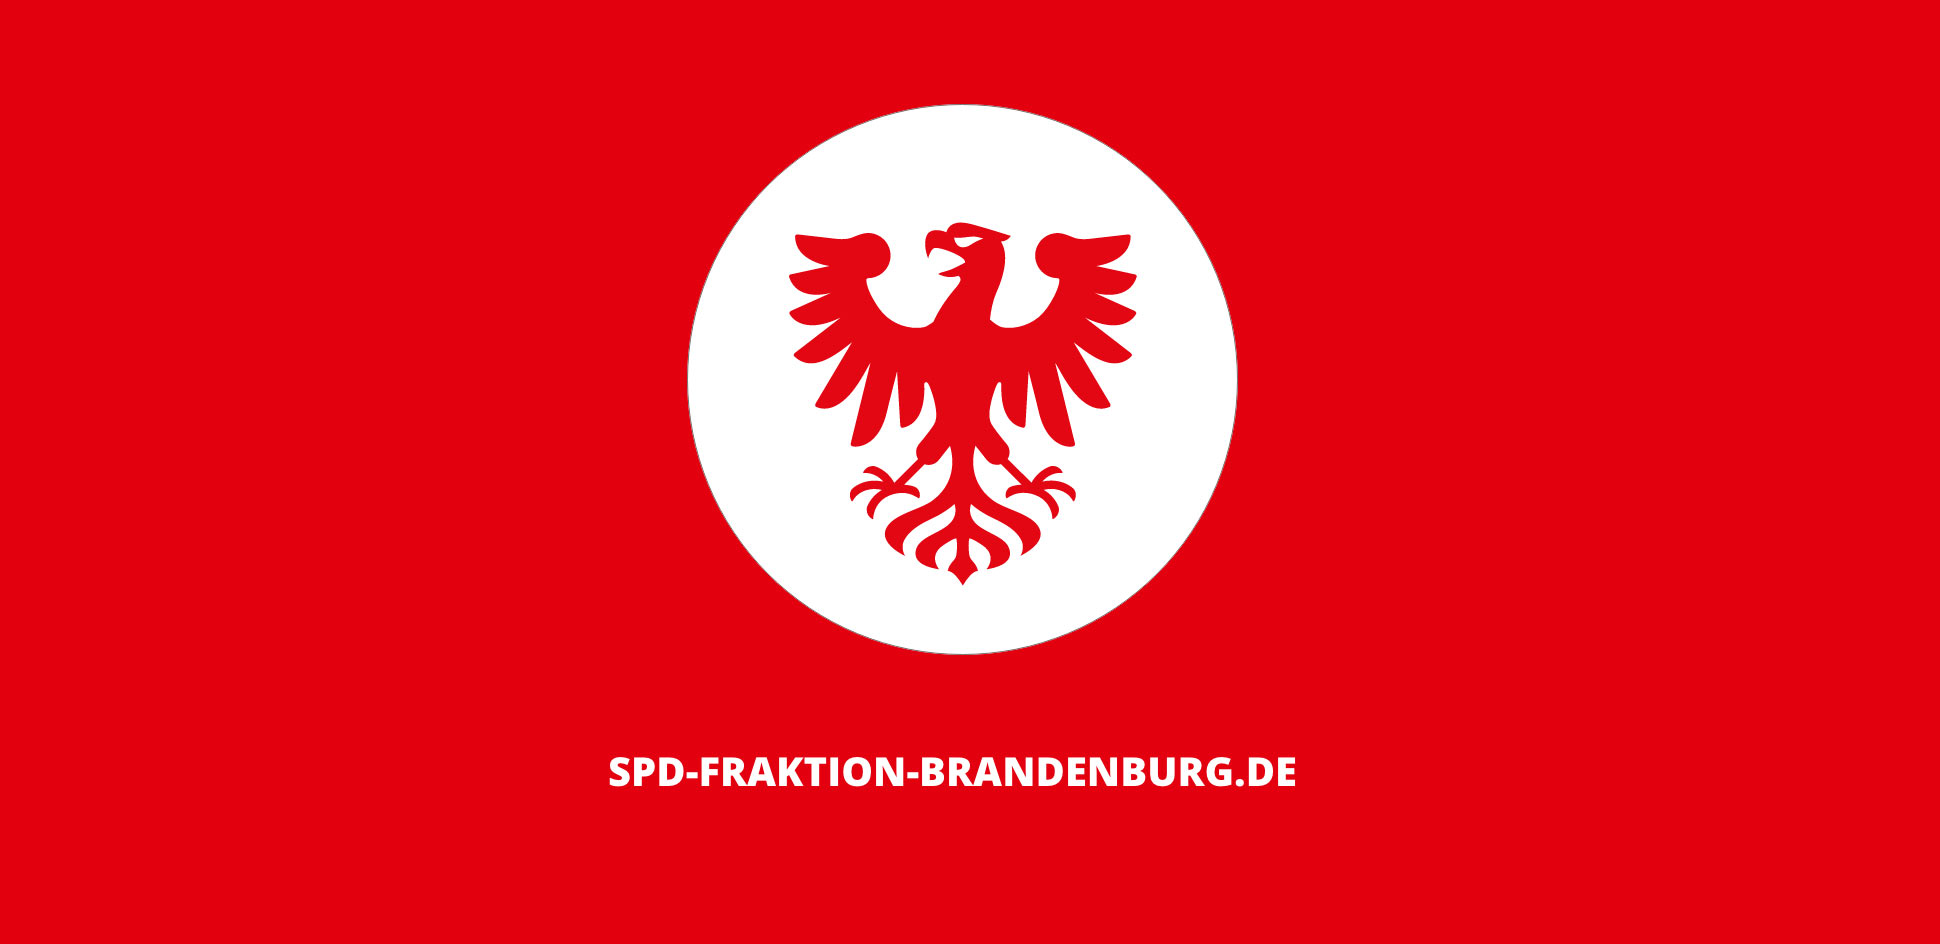 SPD-Fraktion-Brandenburg